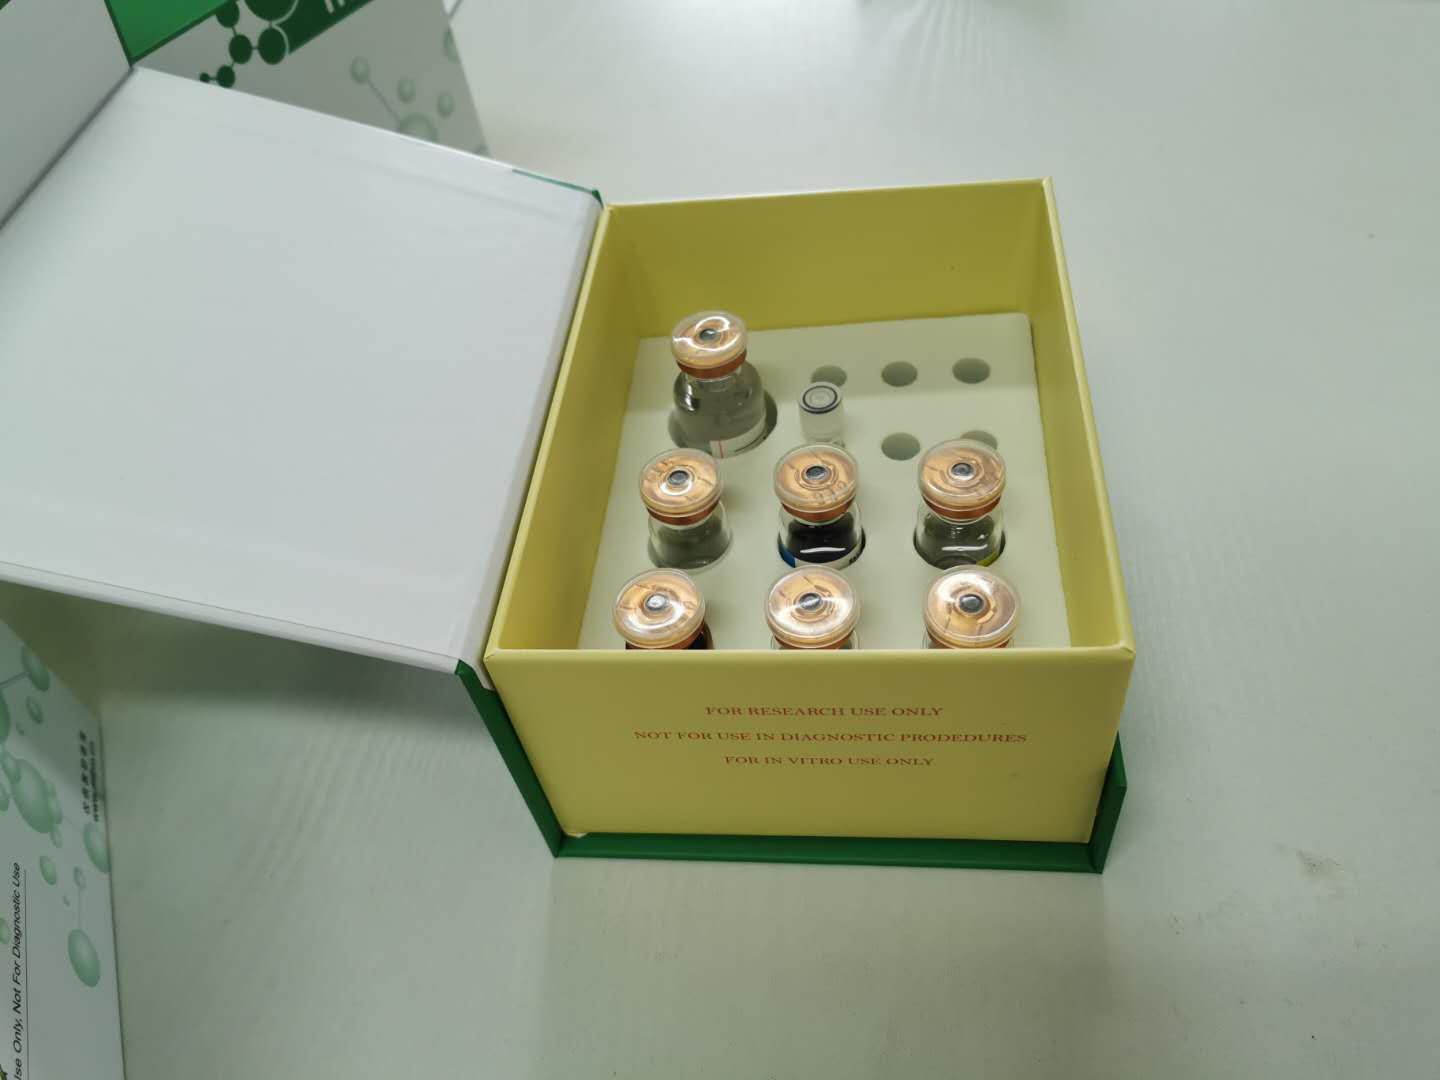 植物细胞分裂素抗体(CTK)ELISA kit使用说明书